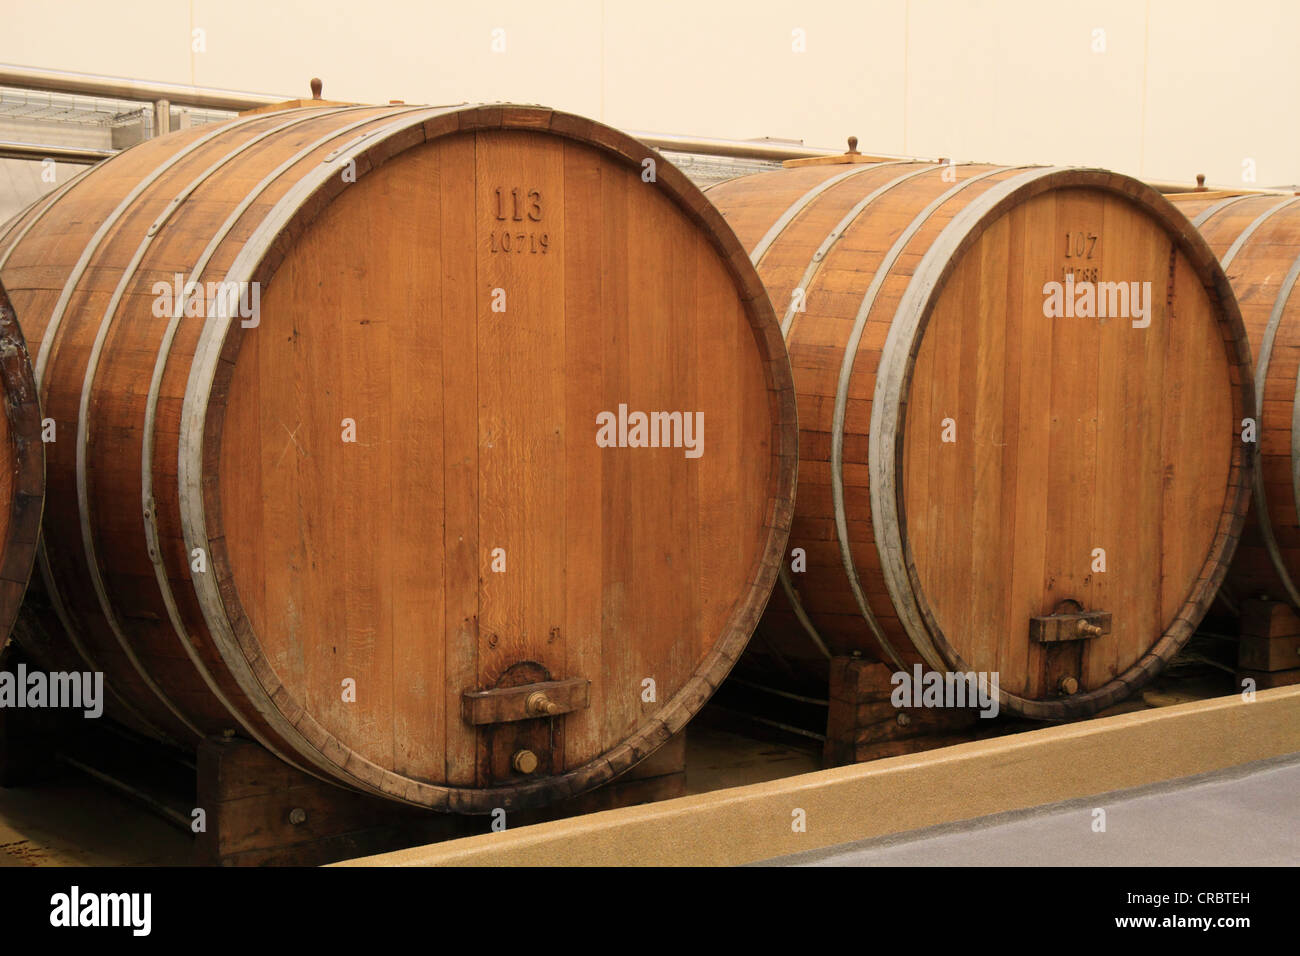 Two large oak barrels for liquor storage, Aalborg Akvavit spirits factory, Aalborg, North Jutland, Denmark, Europe Stock Photo